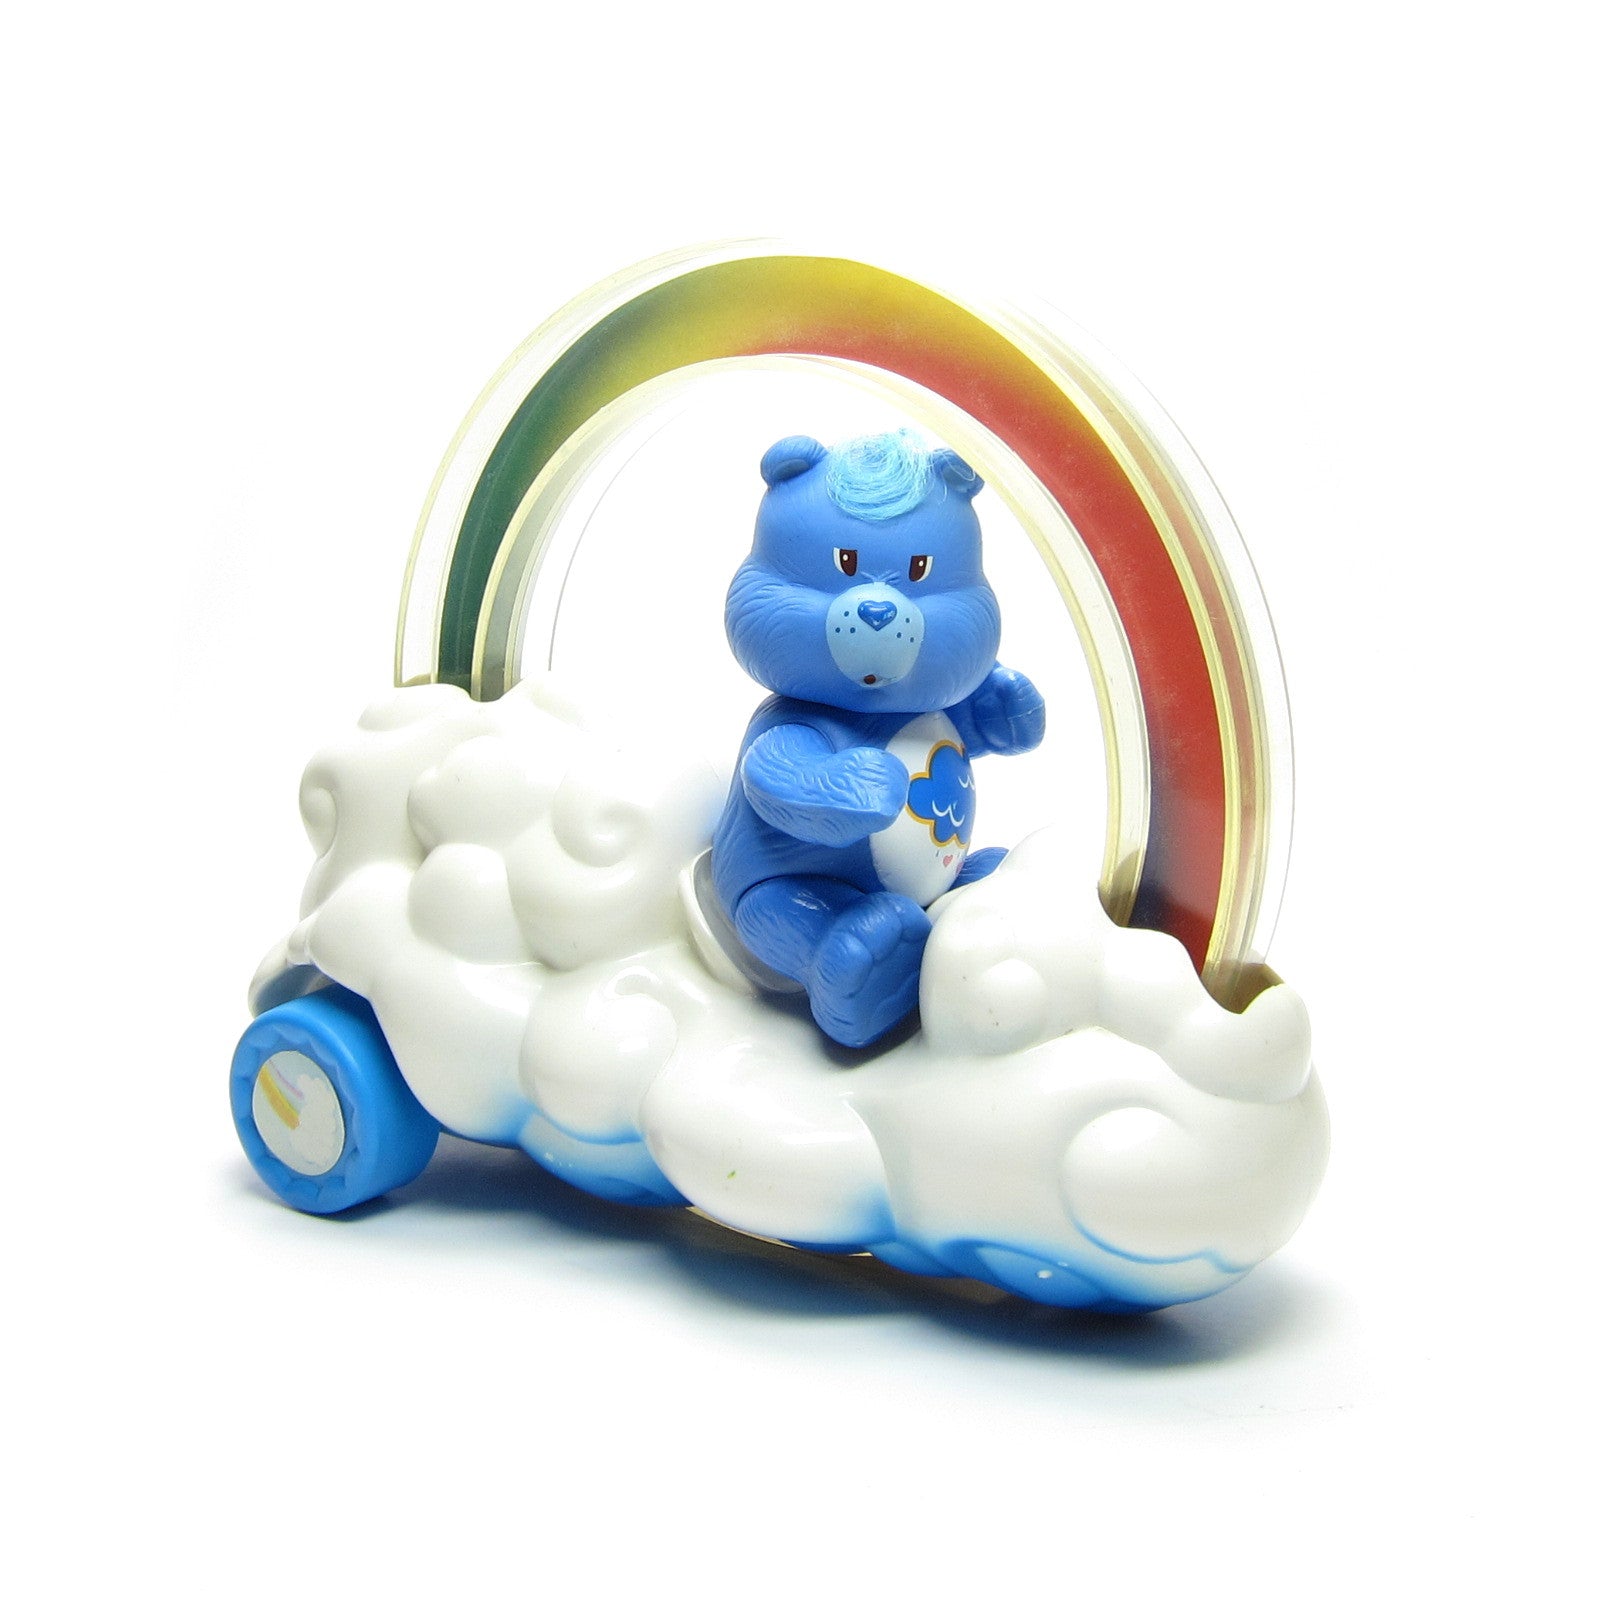 Care Bears Rainbow Roller toy vehicle